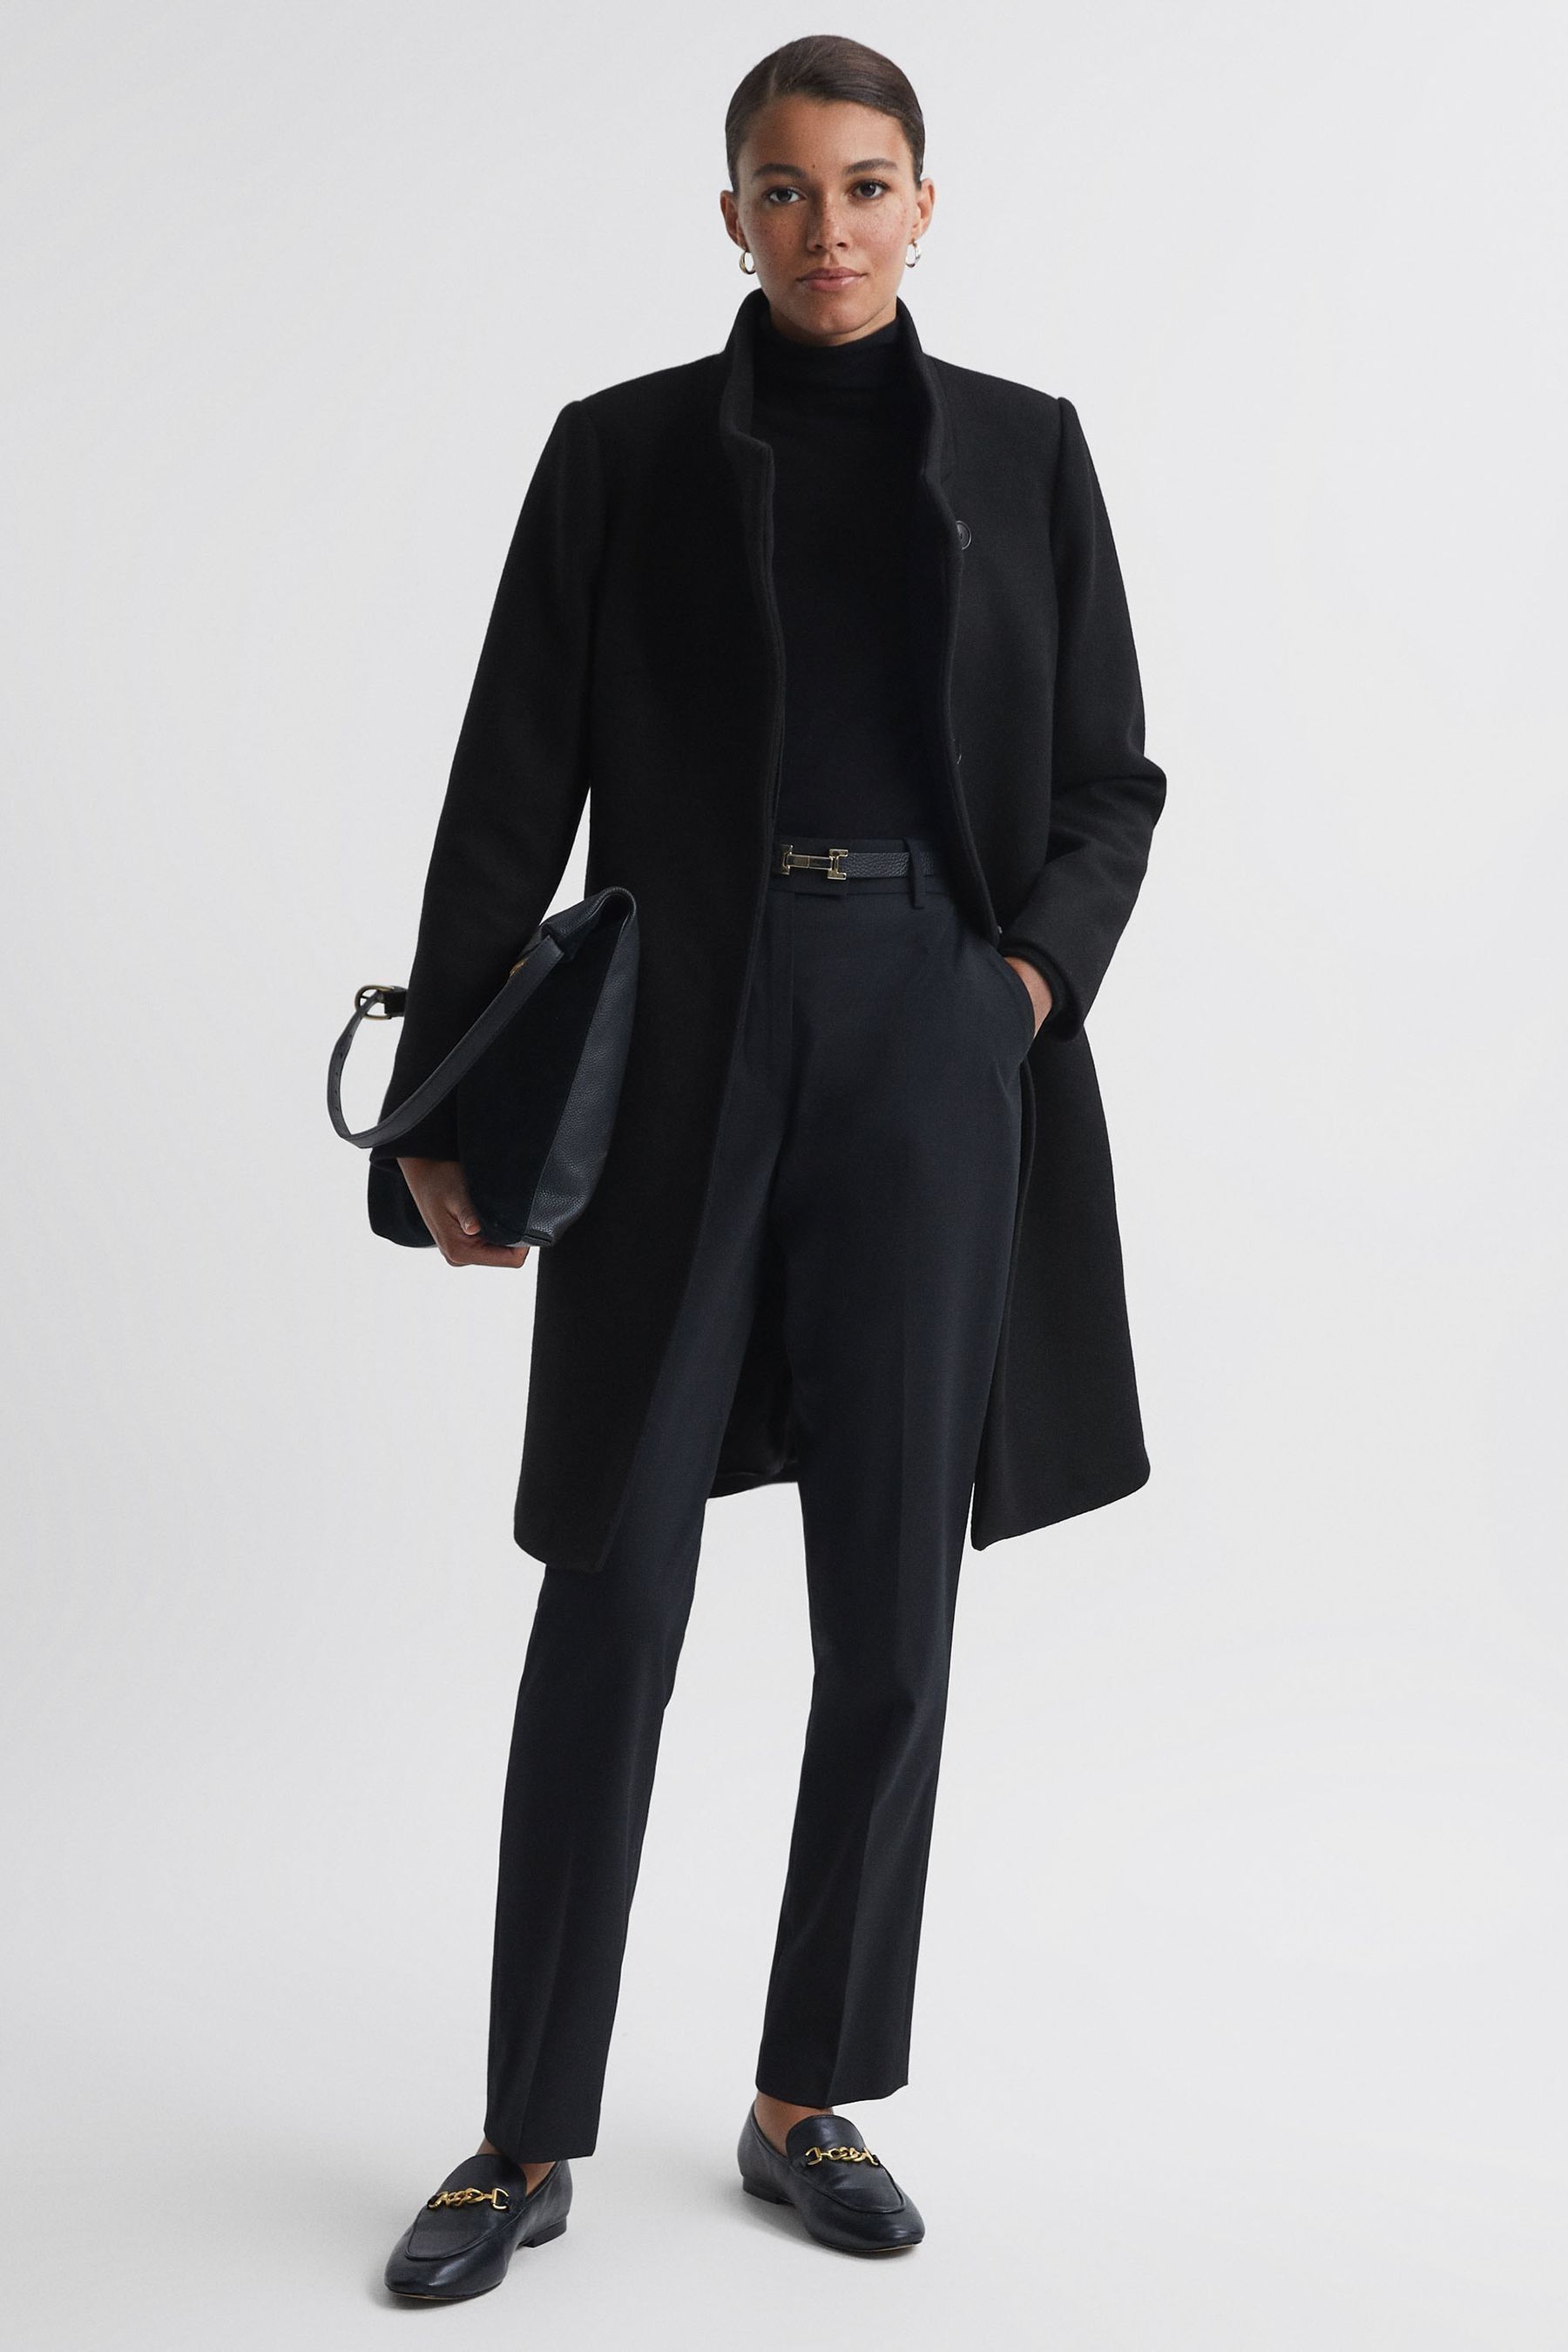 Reiss Mia - Black Wool Blend Mid-length Coat, Us 6